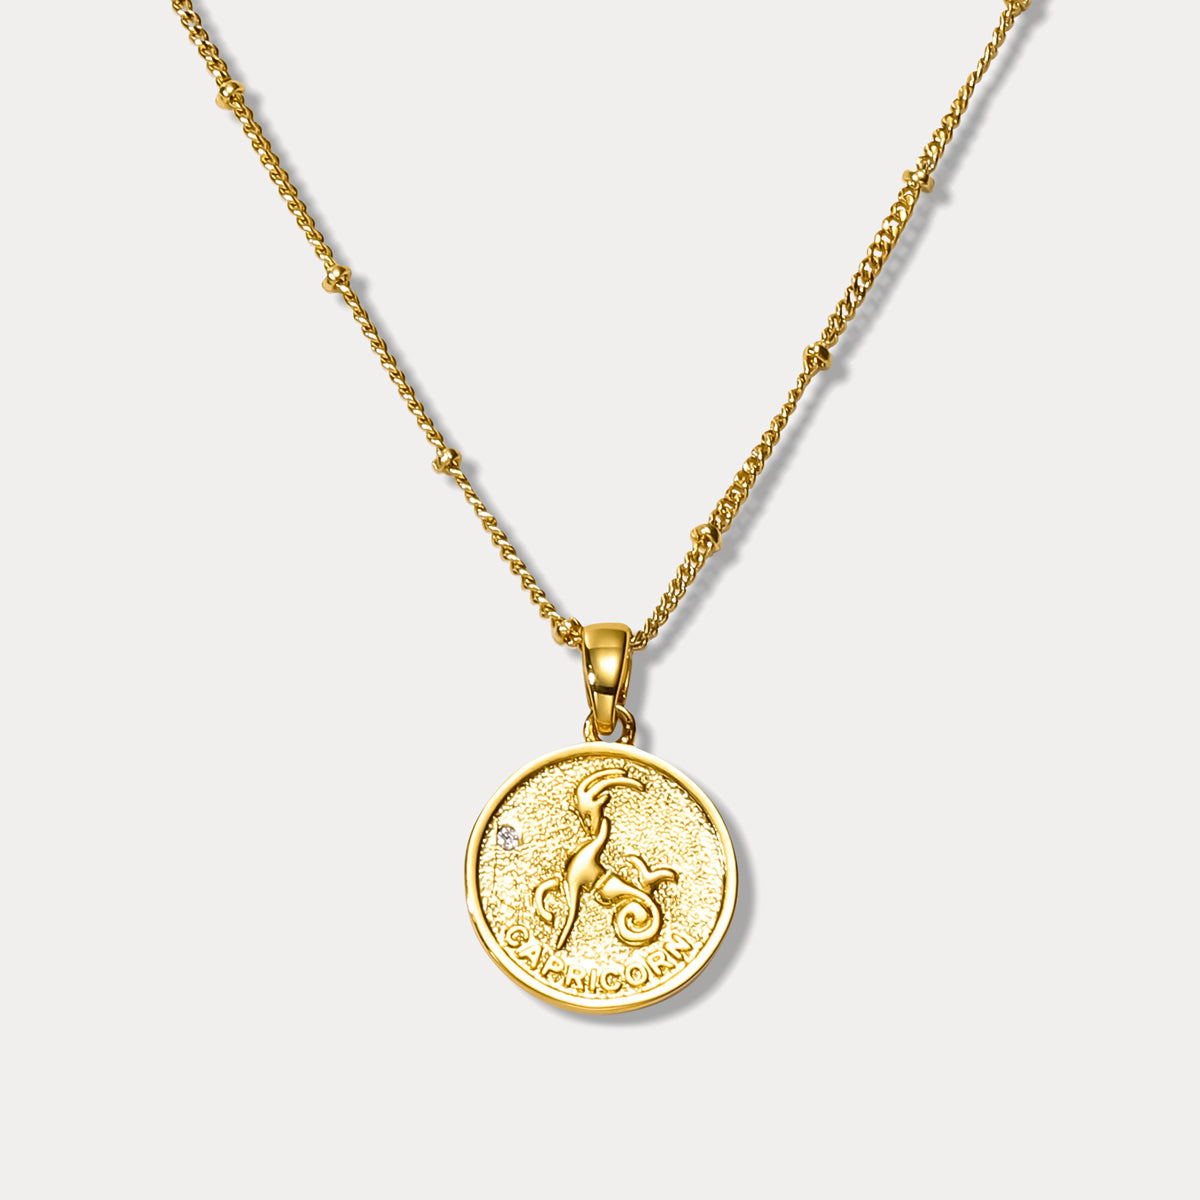 Capricorn Constellation Coin Pendant Necklace